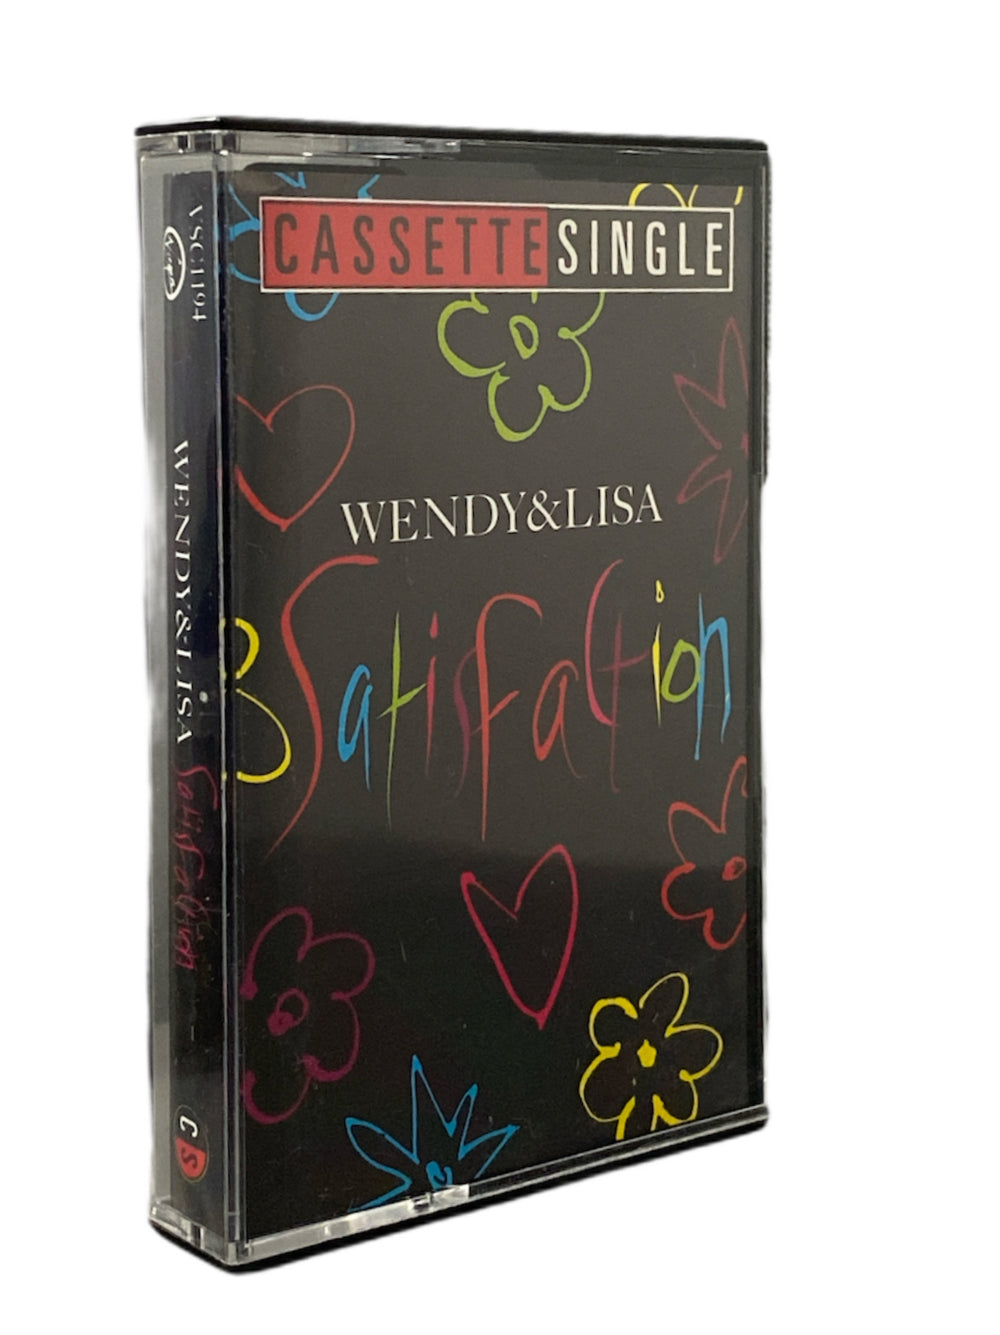 Prince – Wendy & Lisa Satisfaction Tape Cassette Single UK Preloved: 1989